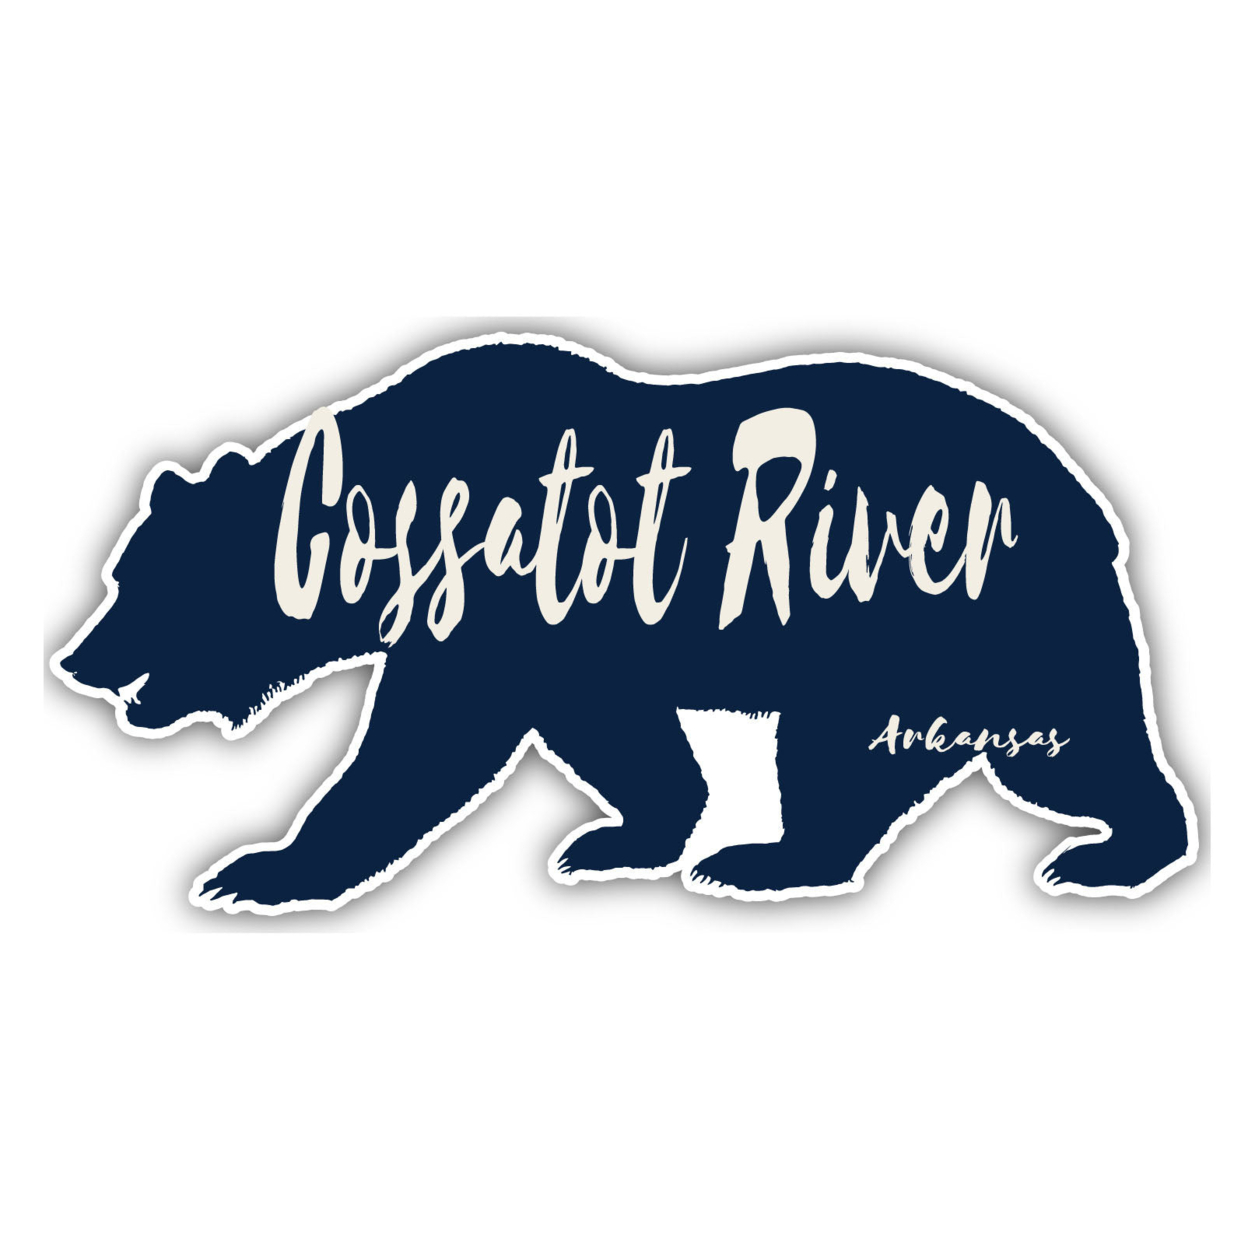 Cossatot River Arkansas Souvenir Decorative Stickers (Choose Theme And Size) - 4-Pack, 10-Inch, Bear